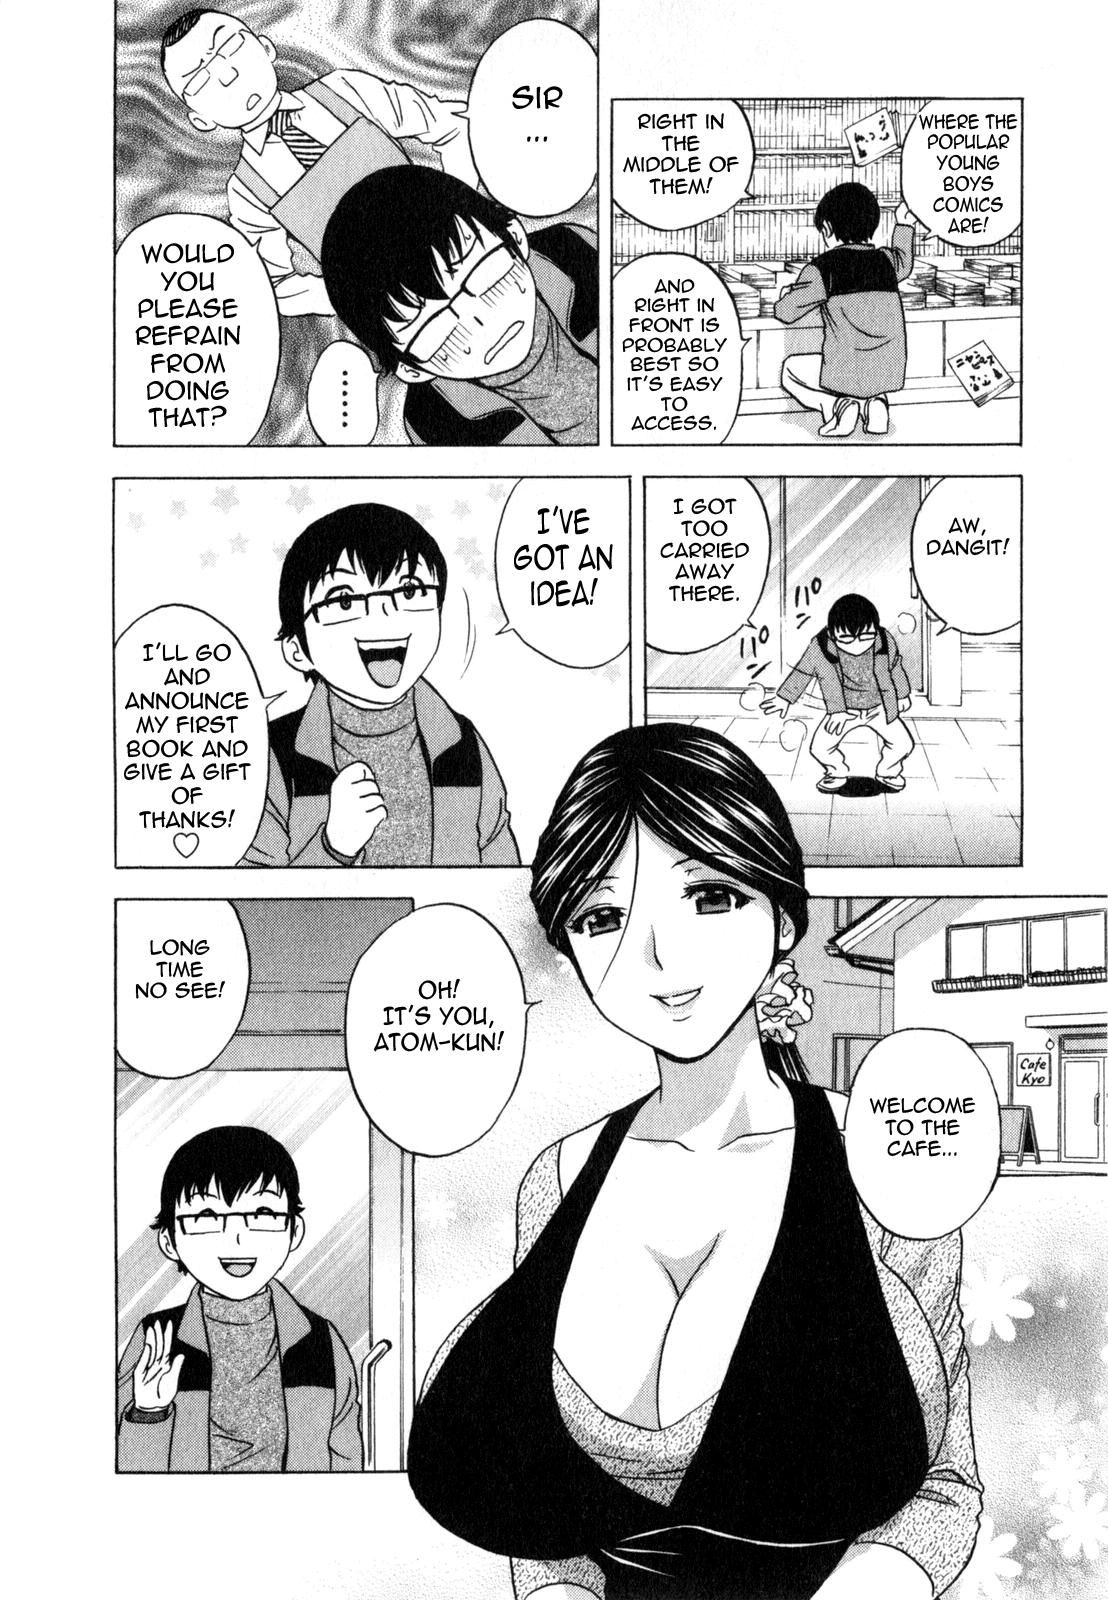 [Hidemaru] Life with Married Women Just Like a Manga 3 - Ch. 1-7 [English] {Tadanohito} 13